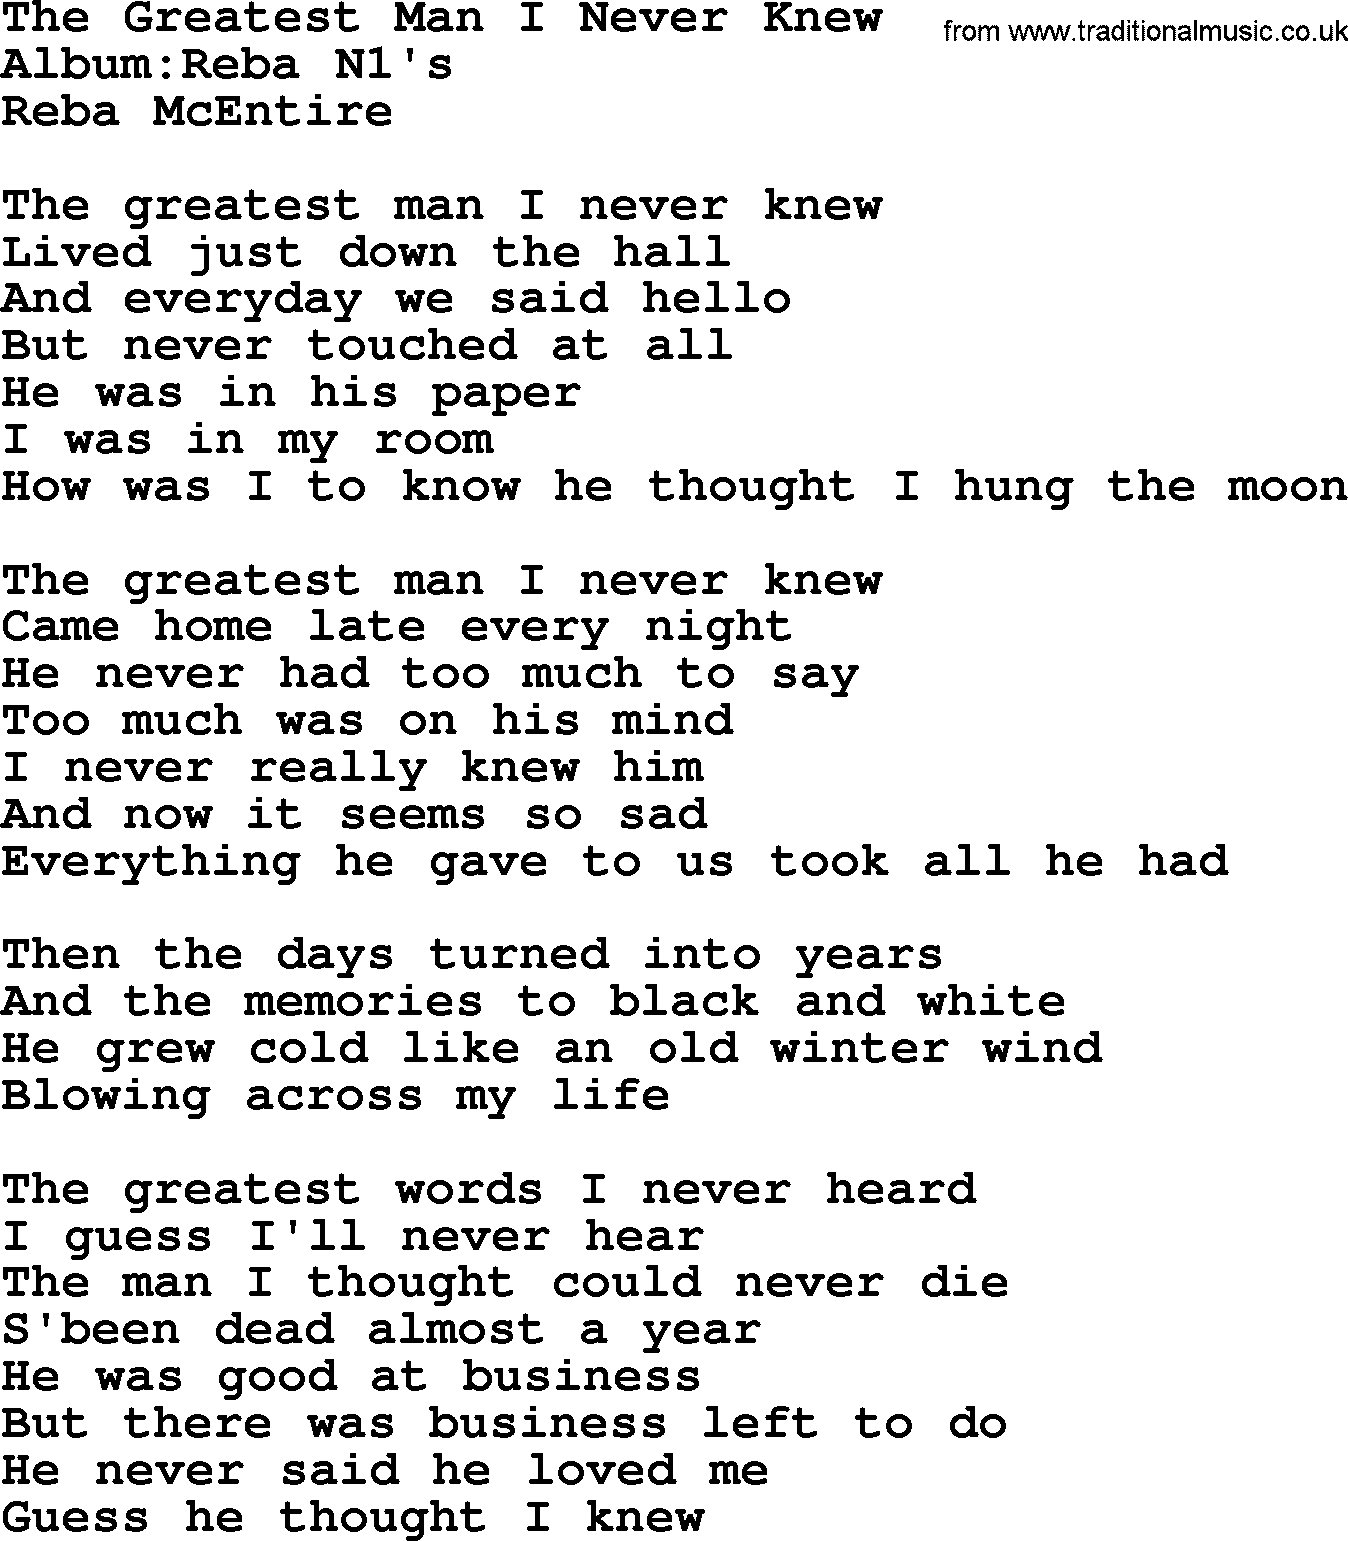 Reba McEntire song: The Greatest Man I Never Knew lyrics